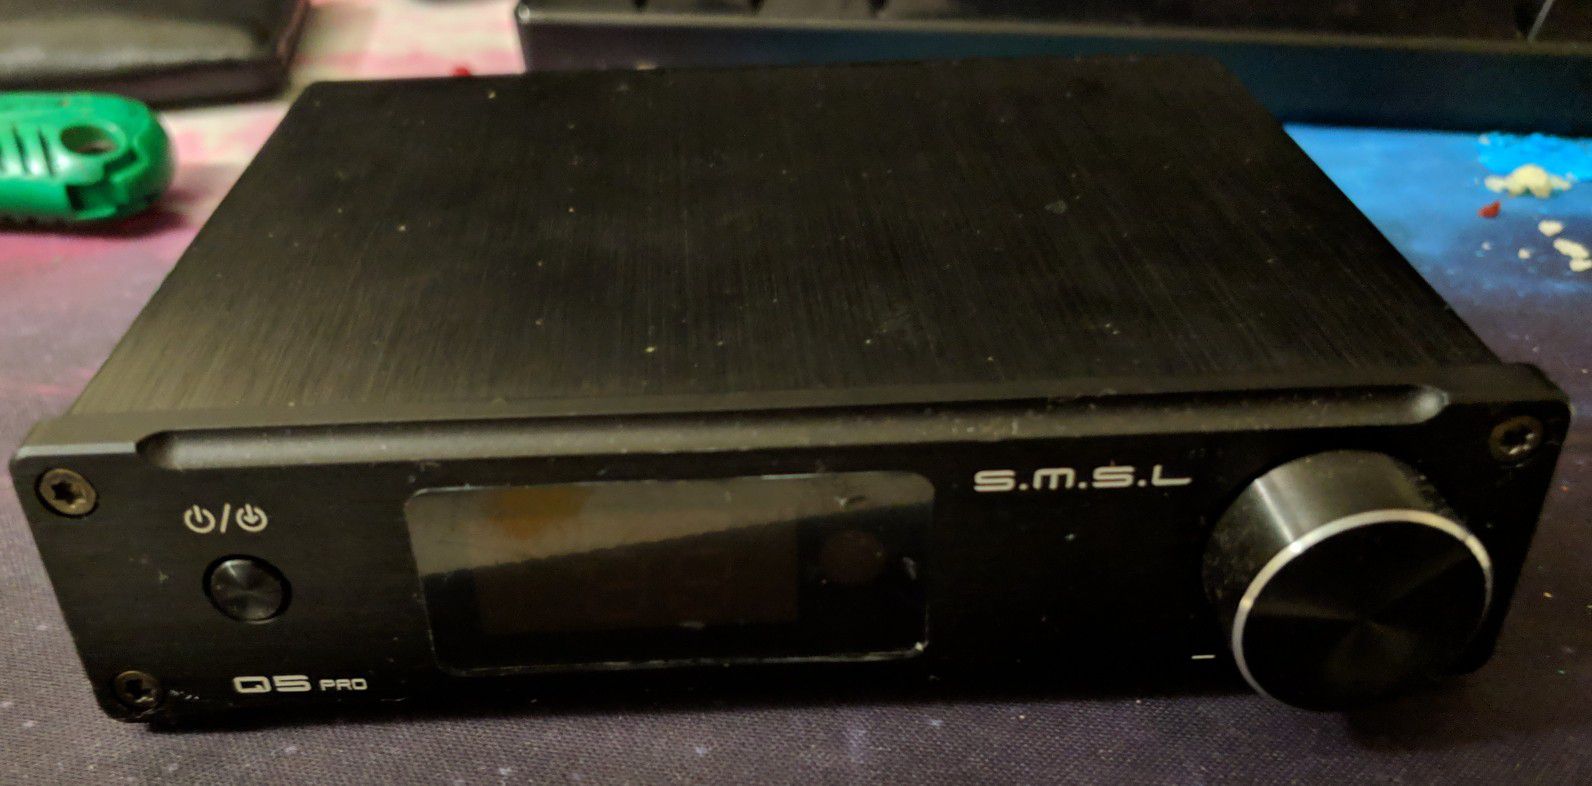 SMSL Q5 Pro Digital audio Amplifier